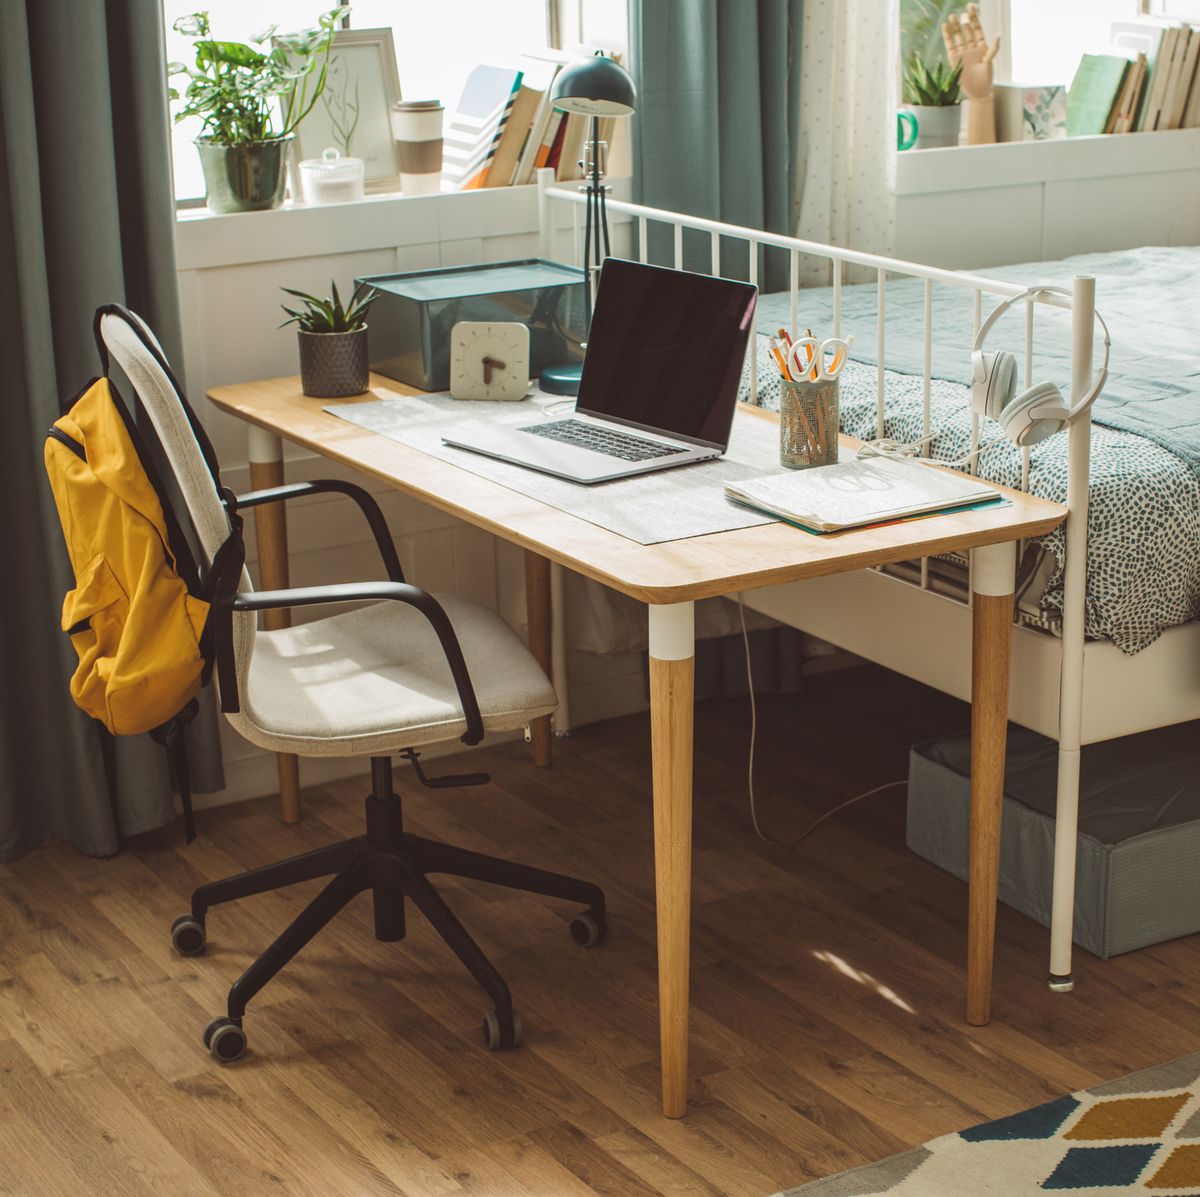 Desk ideas for small bedrooms: small bedroom desk ideas